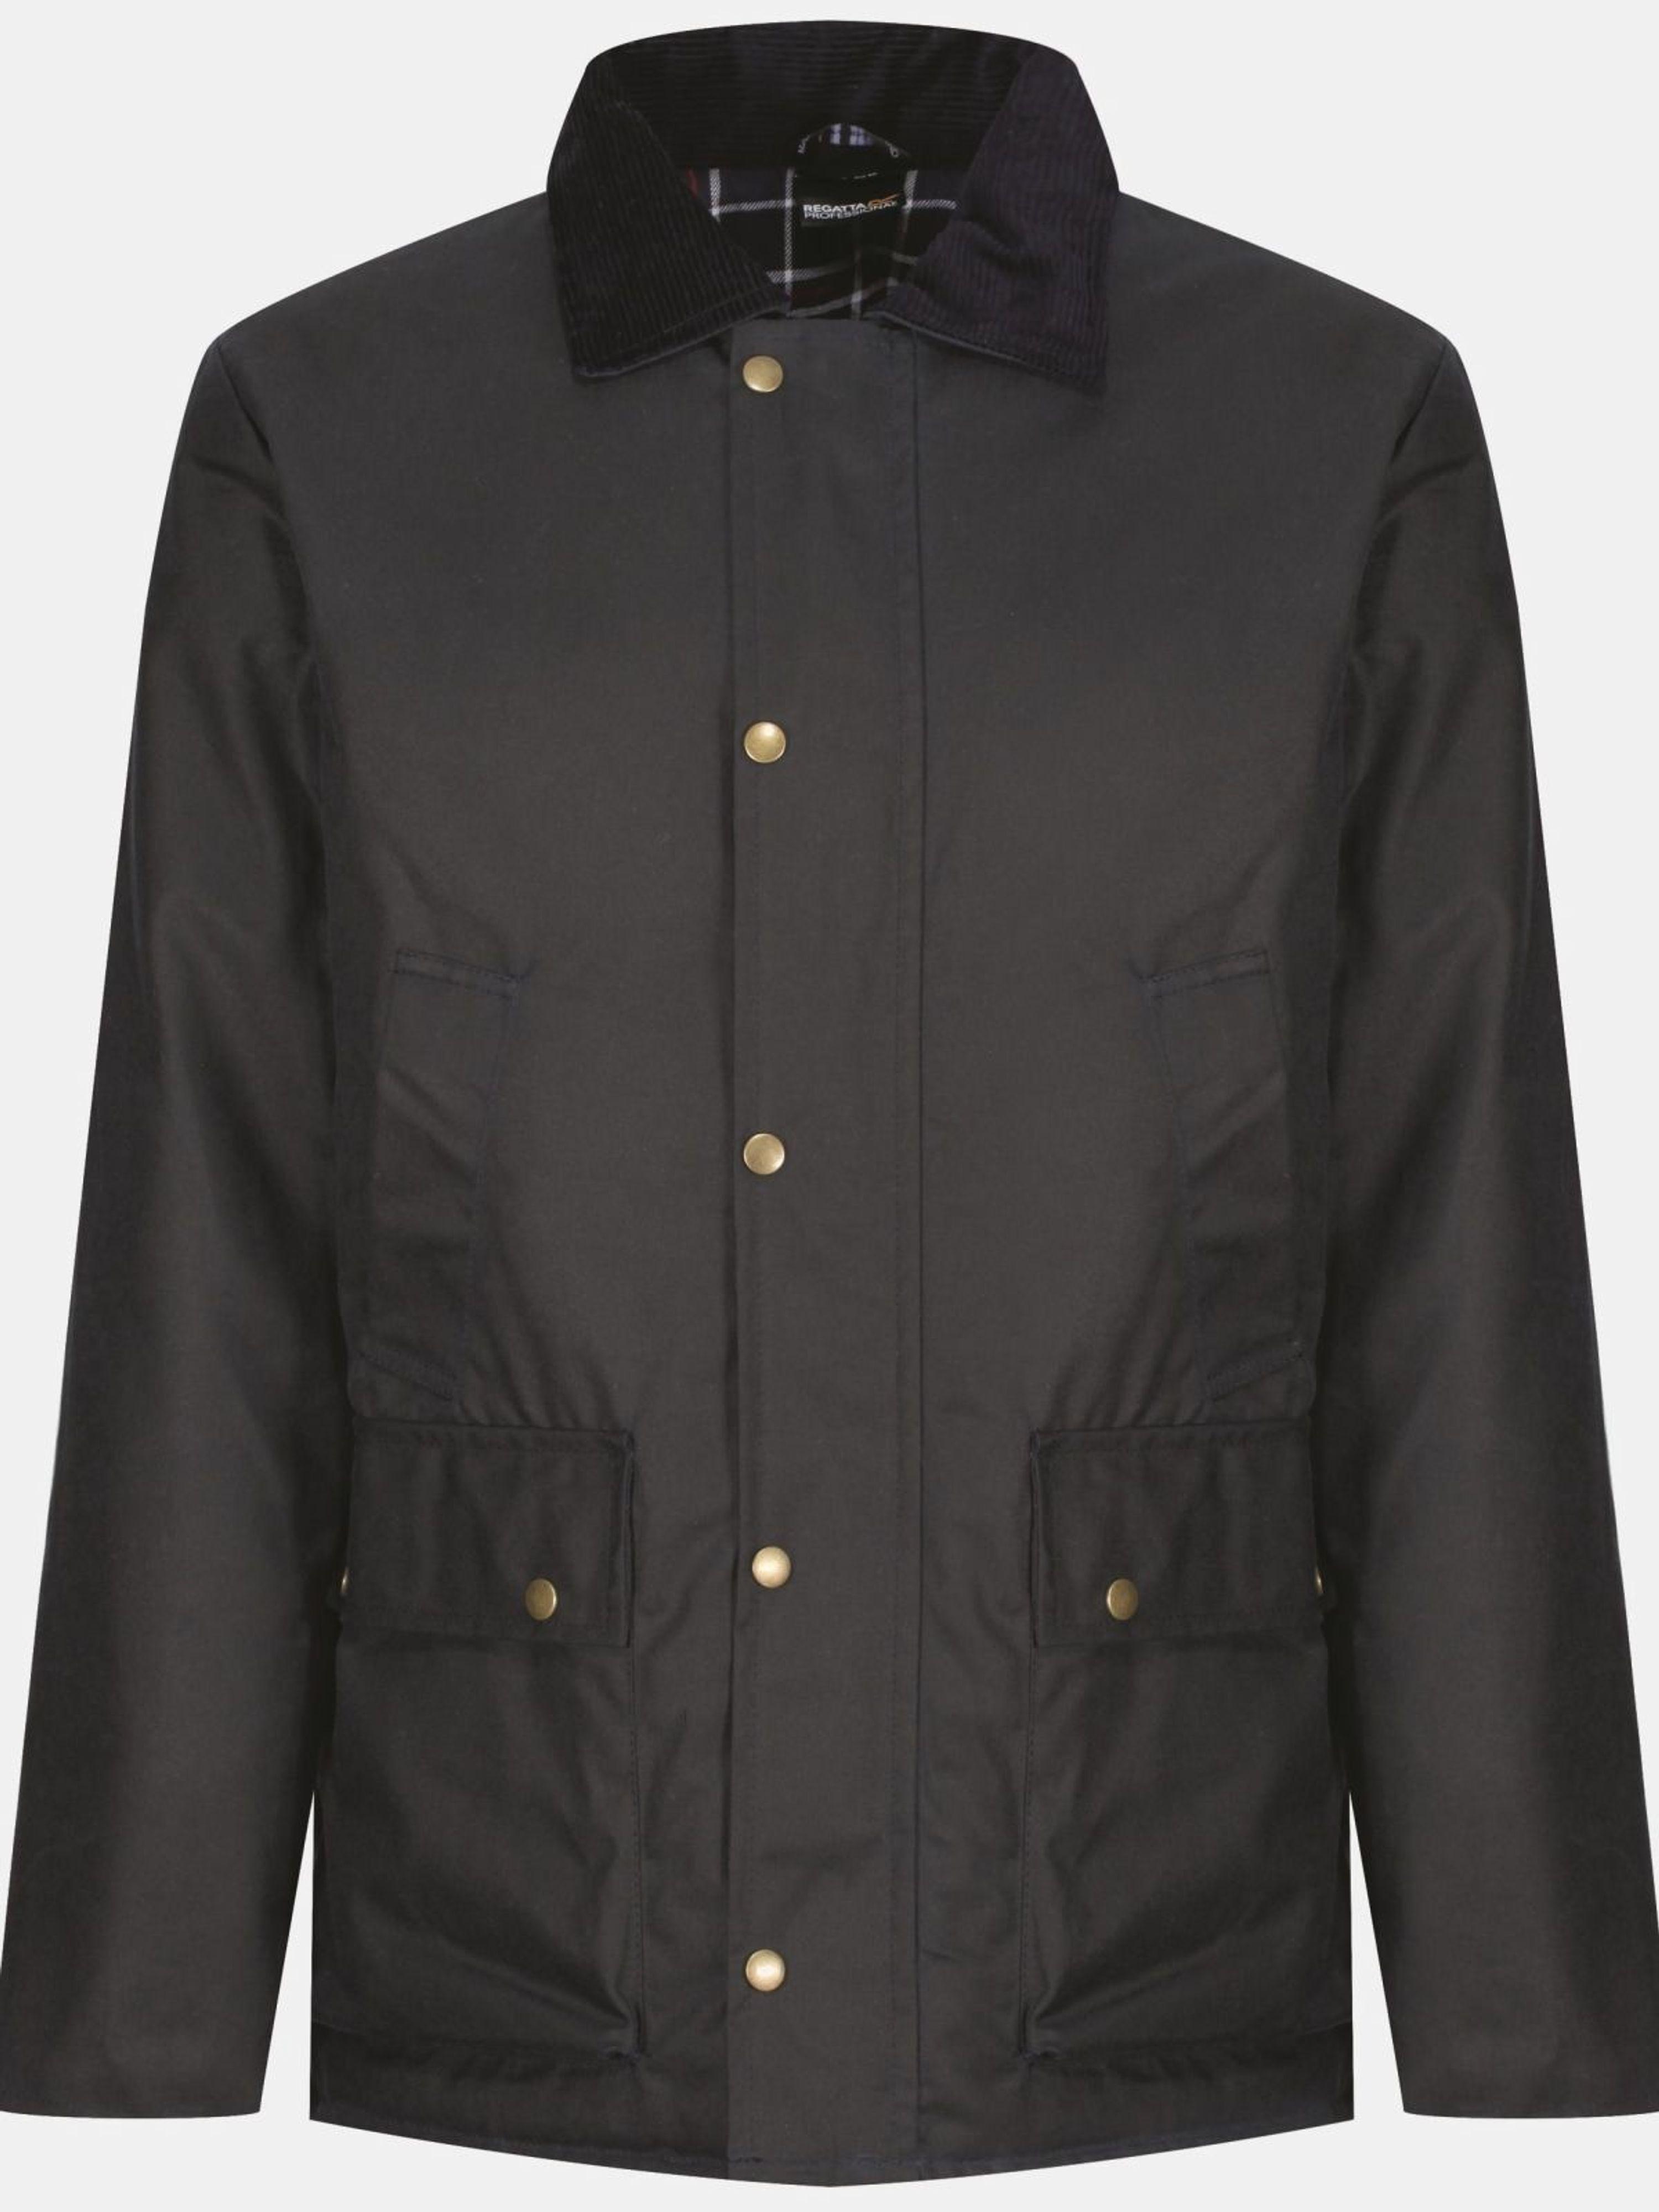 Regatta Pensford Waxed Jacket in Black for Men | Lyst